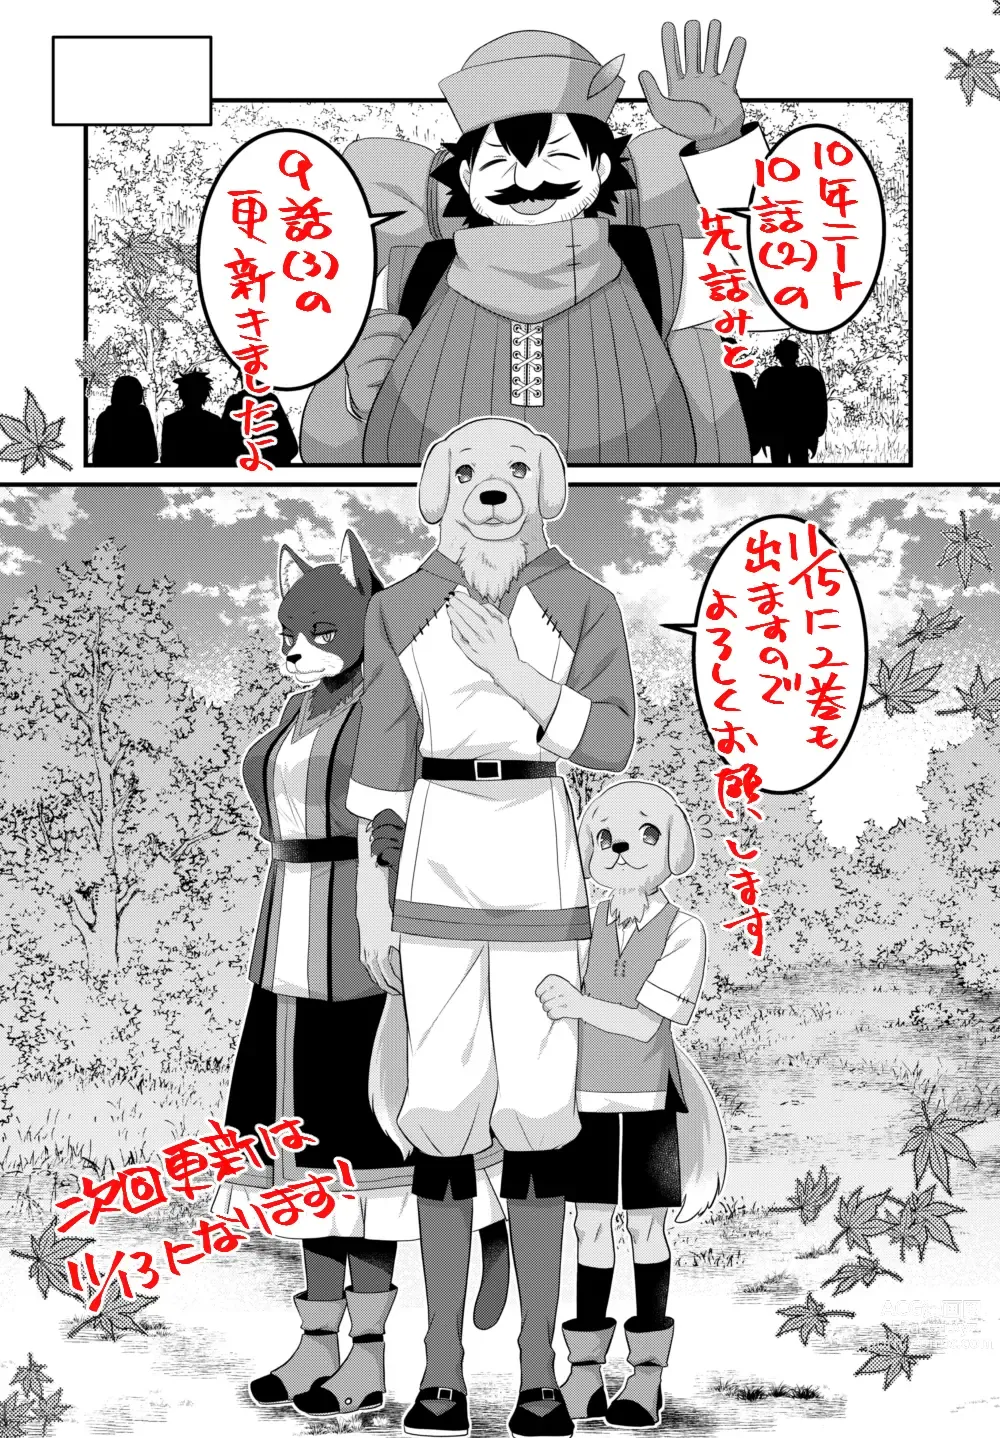 Page 6 of imageset ●PIXIV● たぢまよしかづ